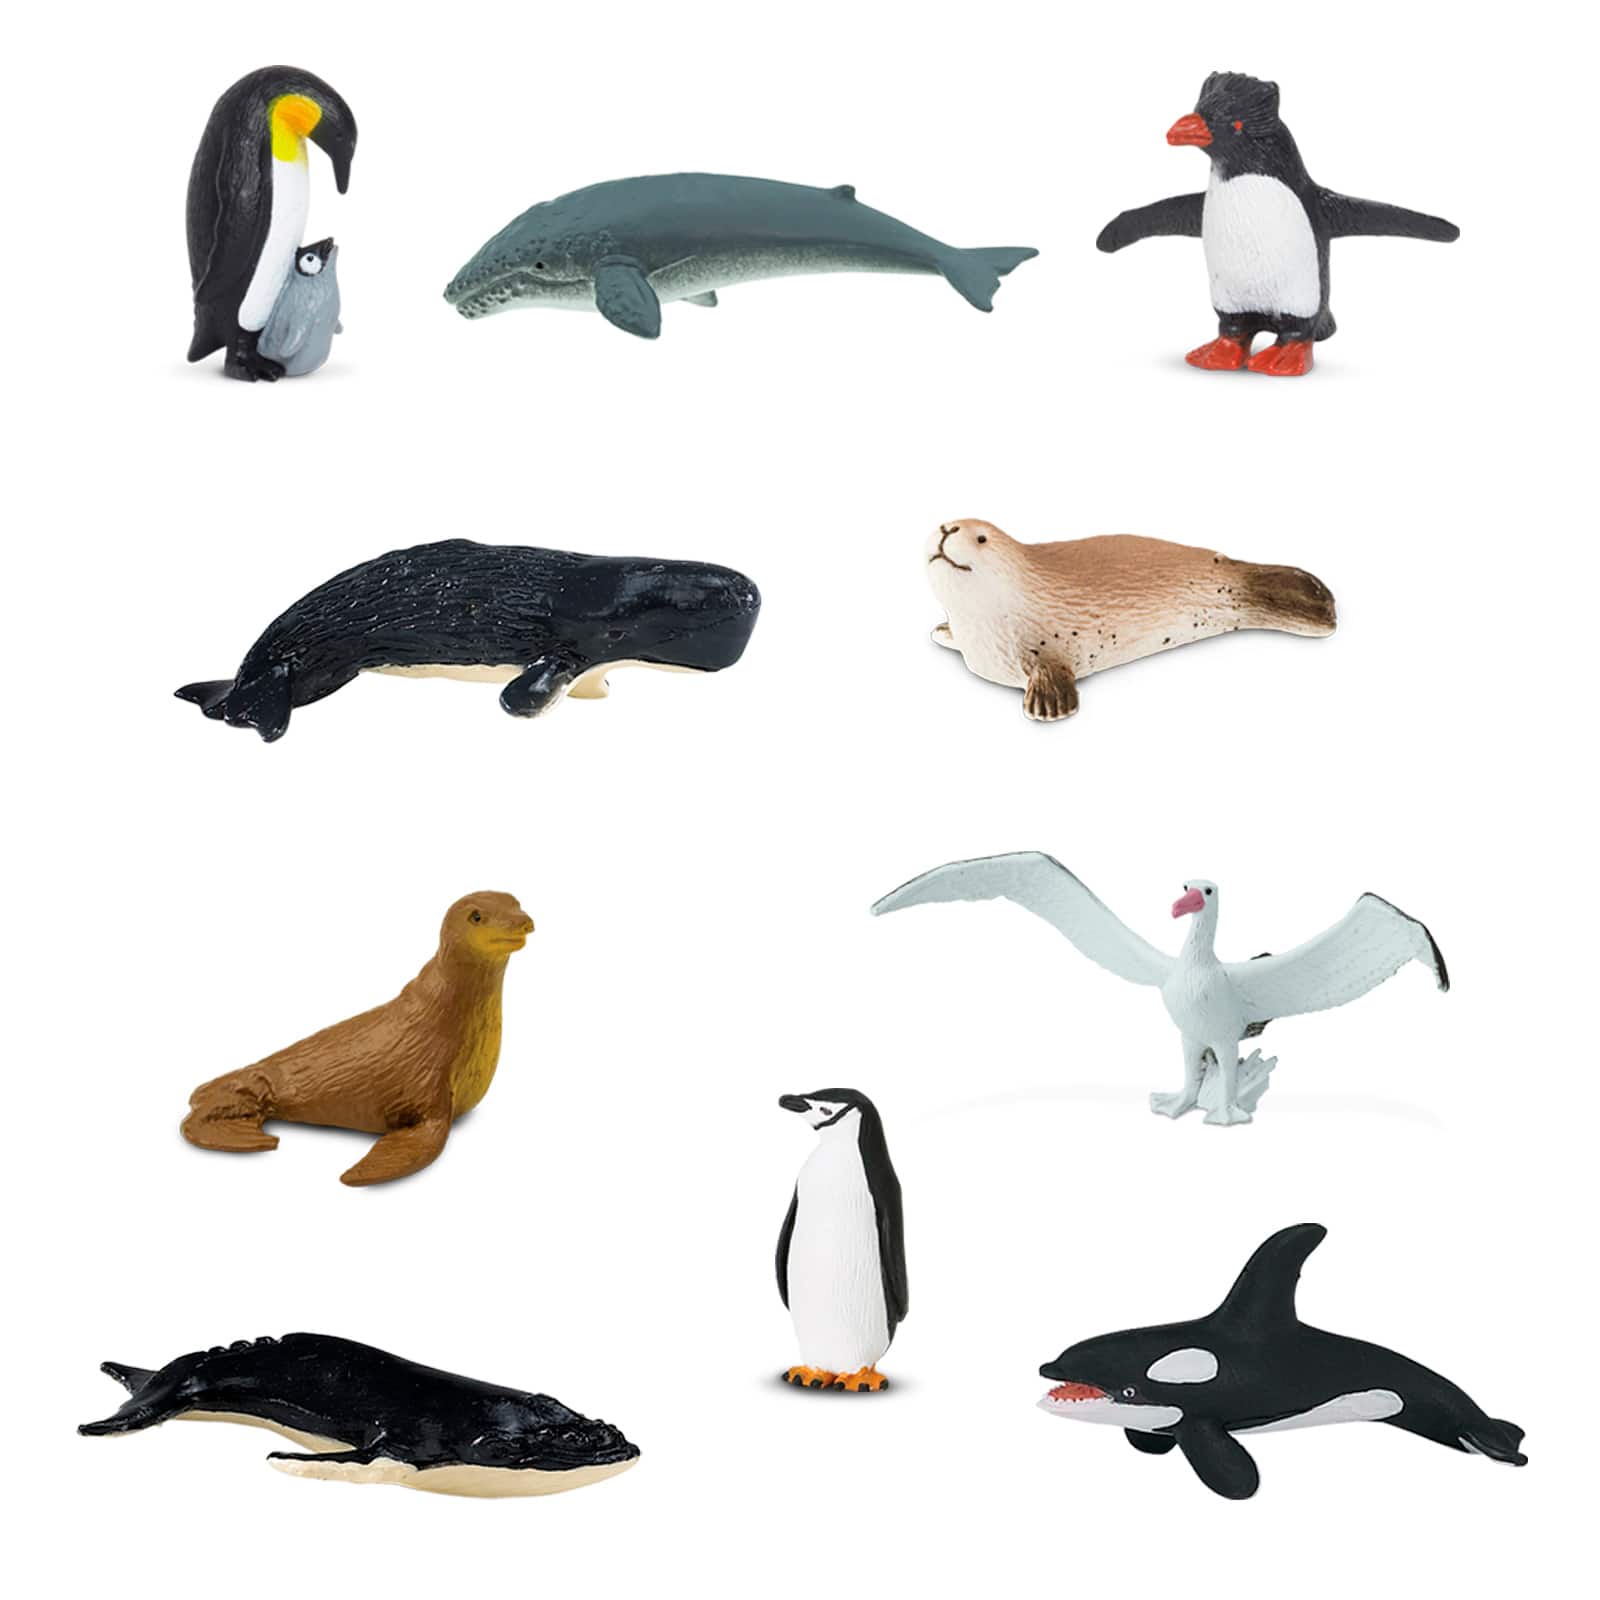 Details about   Safari Ltd Antarctica Wildlife 100113 Toob Mini Replica Figure Toy New 